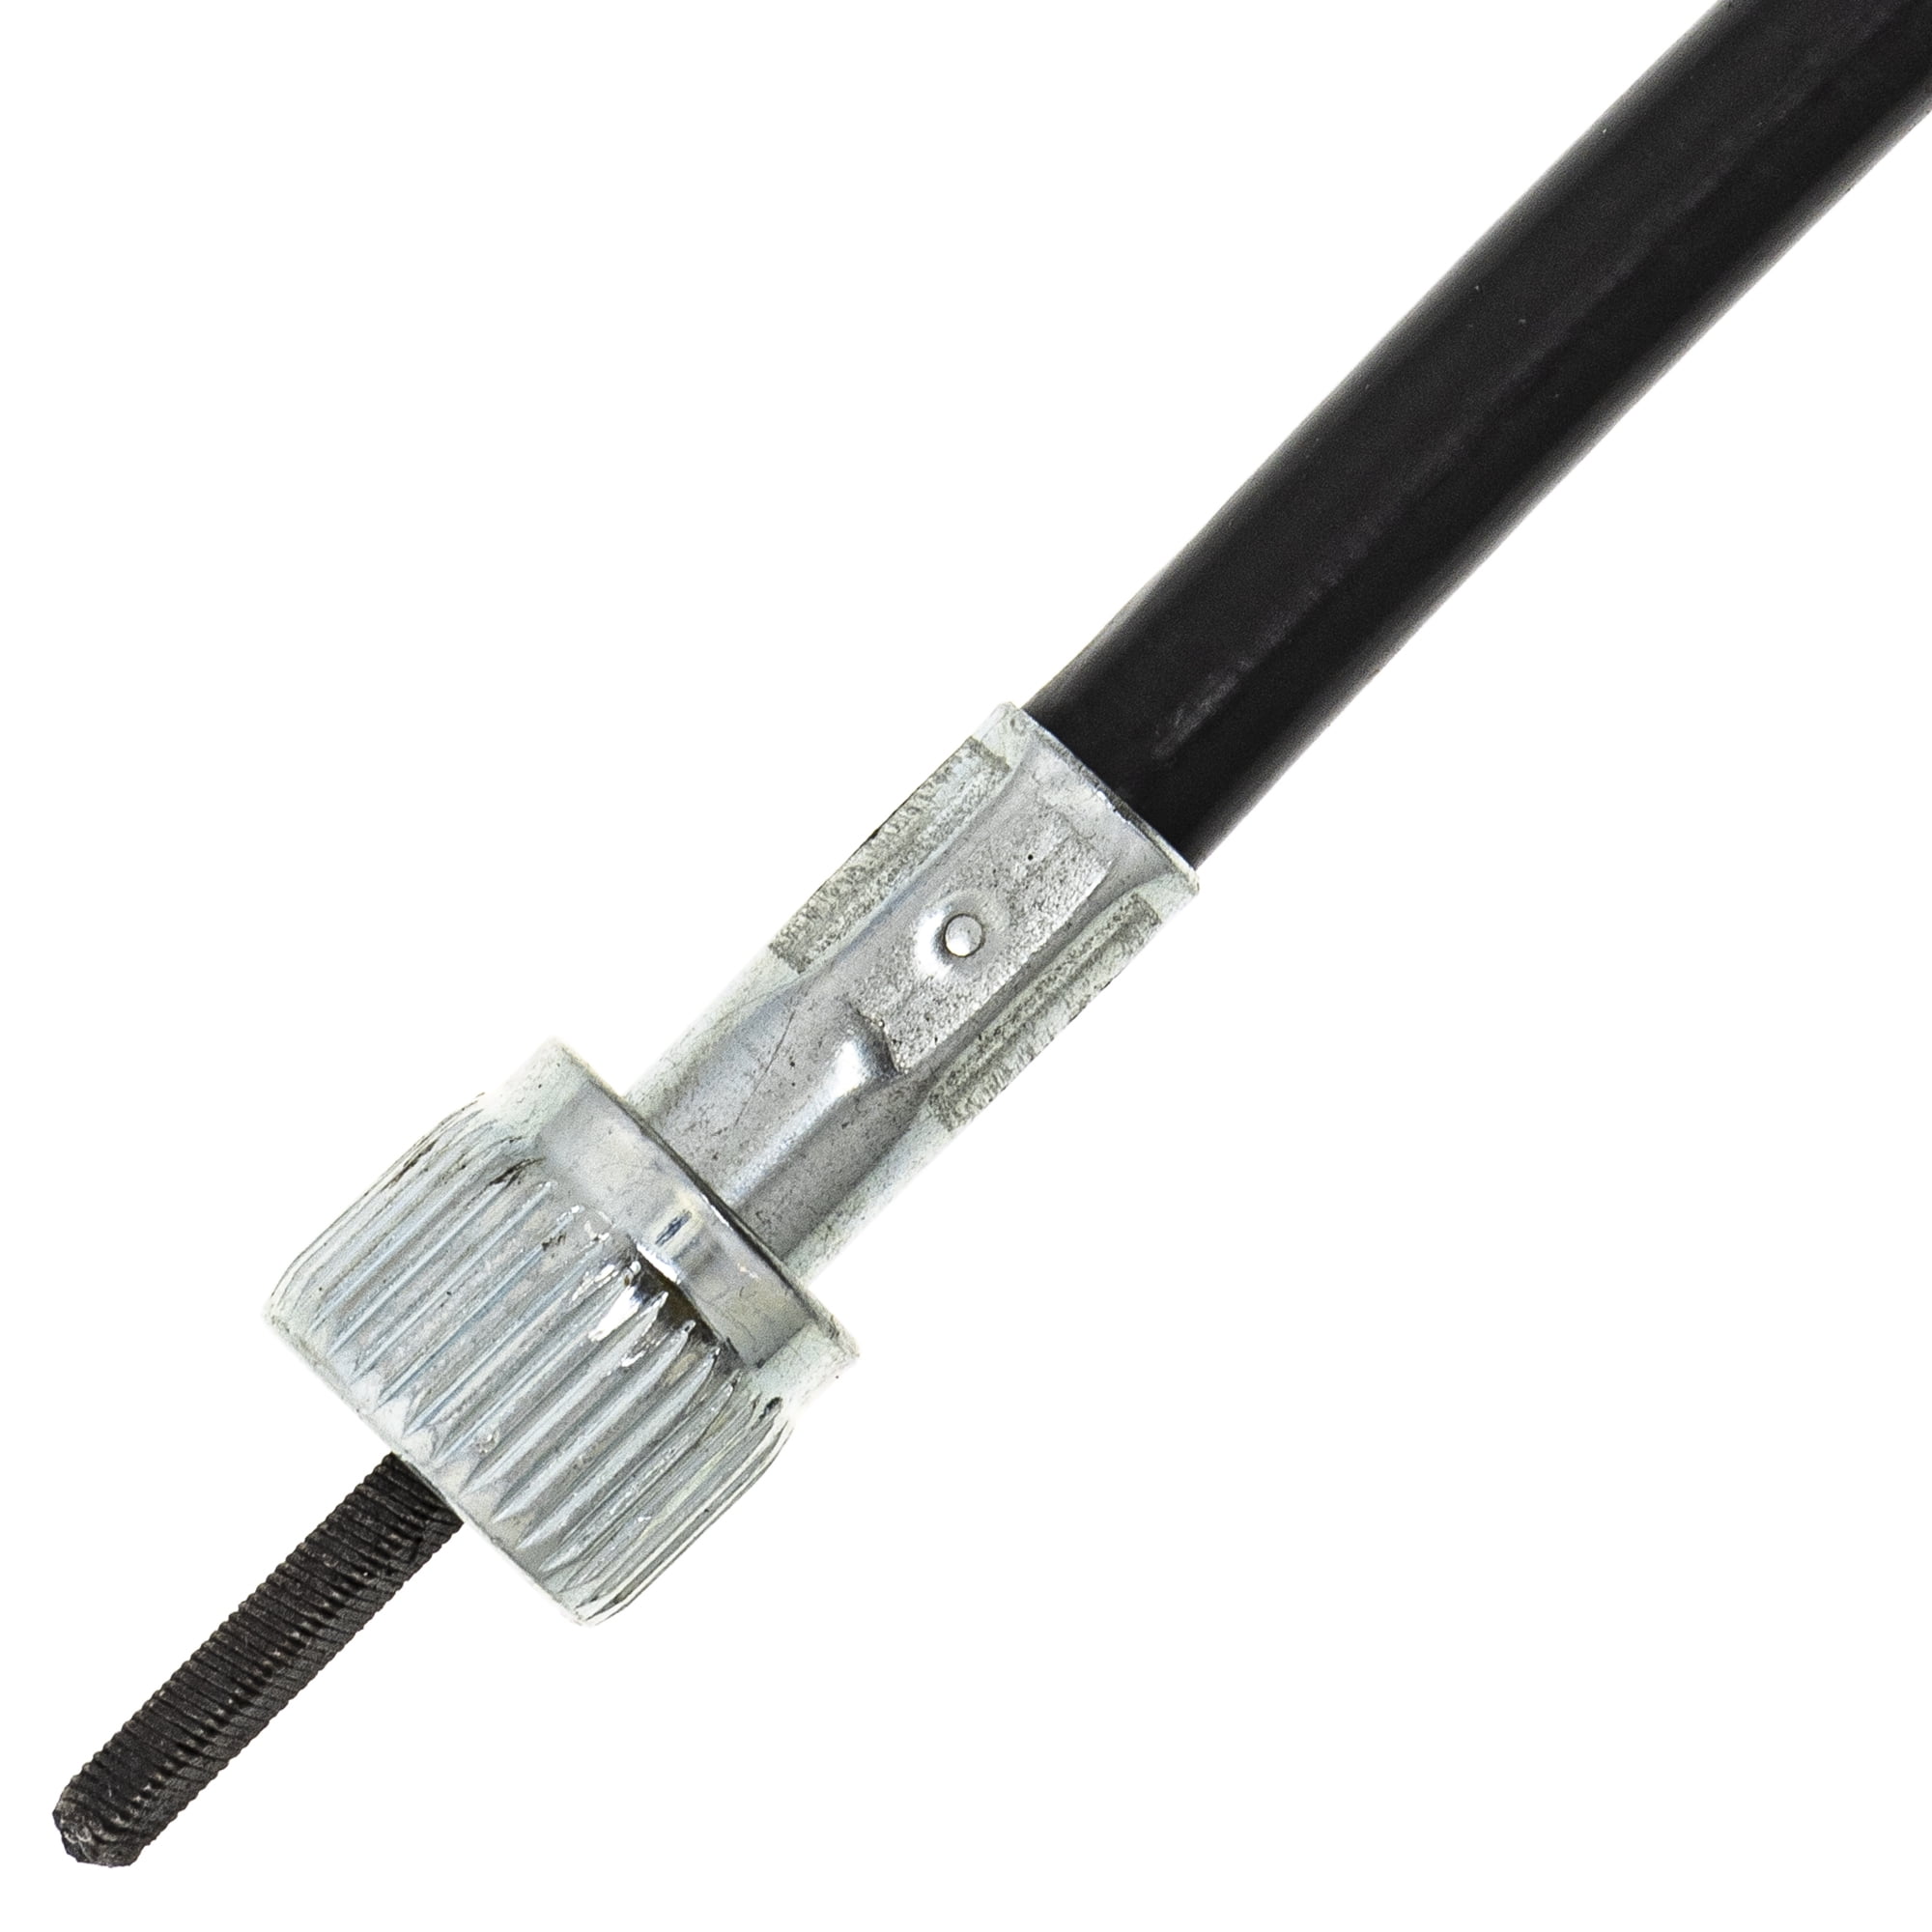 NICHE Speedometer Cable for Yamaha Virago 750 1100 1000 700 Seca 920 FZ750R FZR1000 2GH-83550-01-00 3LP-83550-00-00 